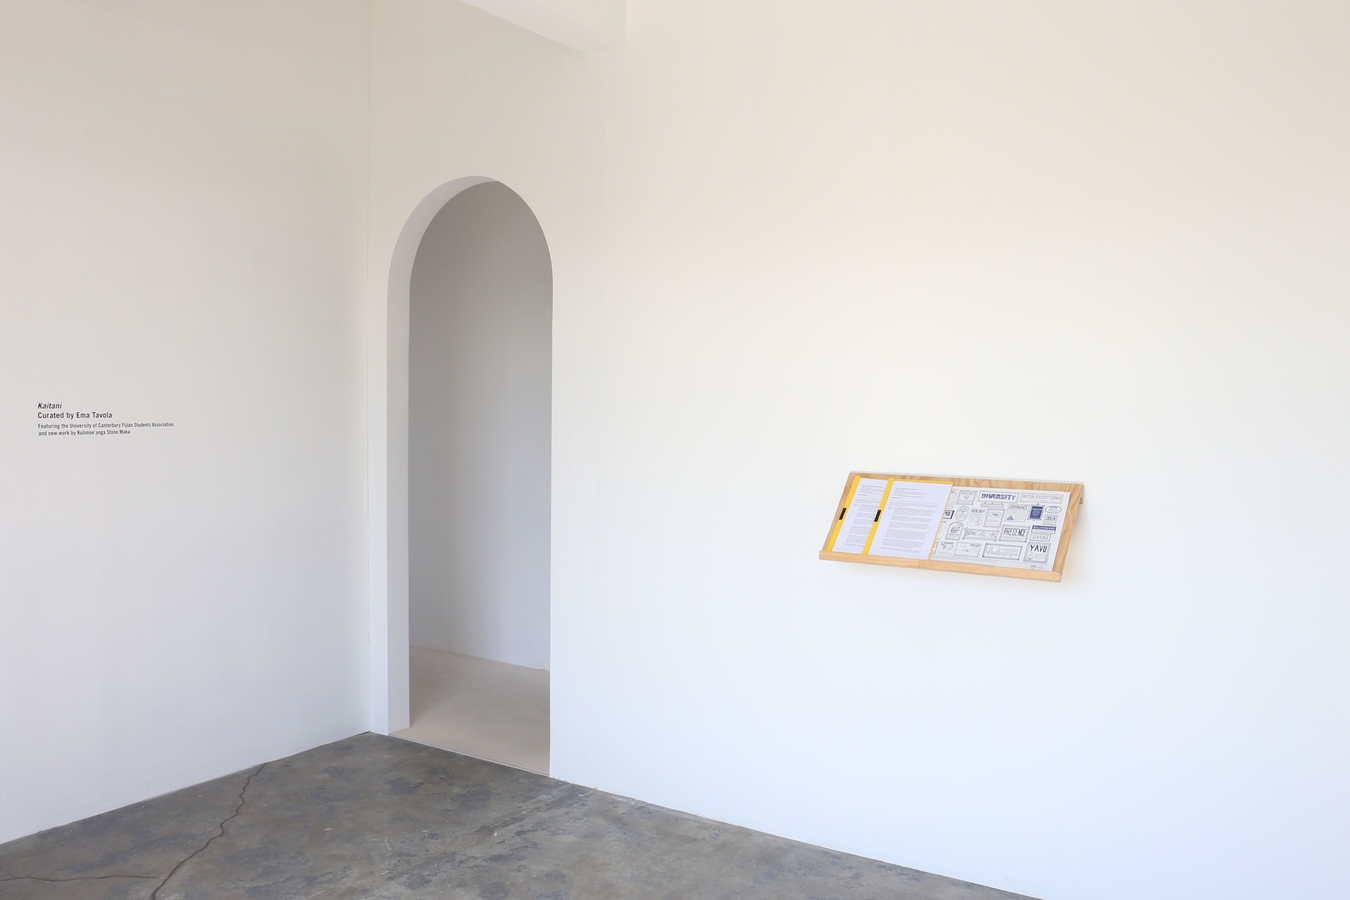 Installation view of Kaitani, curated by Ema Tavola, 2017. Image: Daegan Wells.